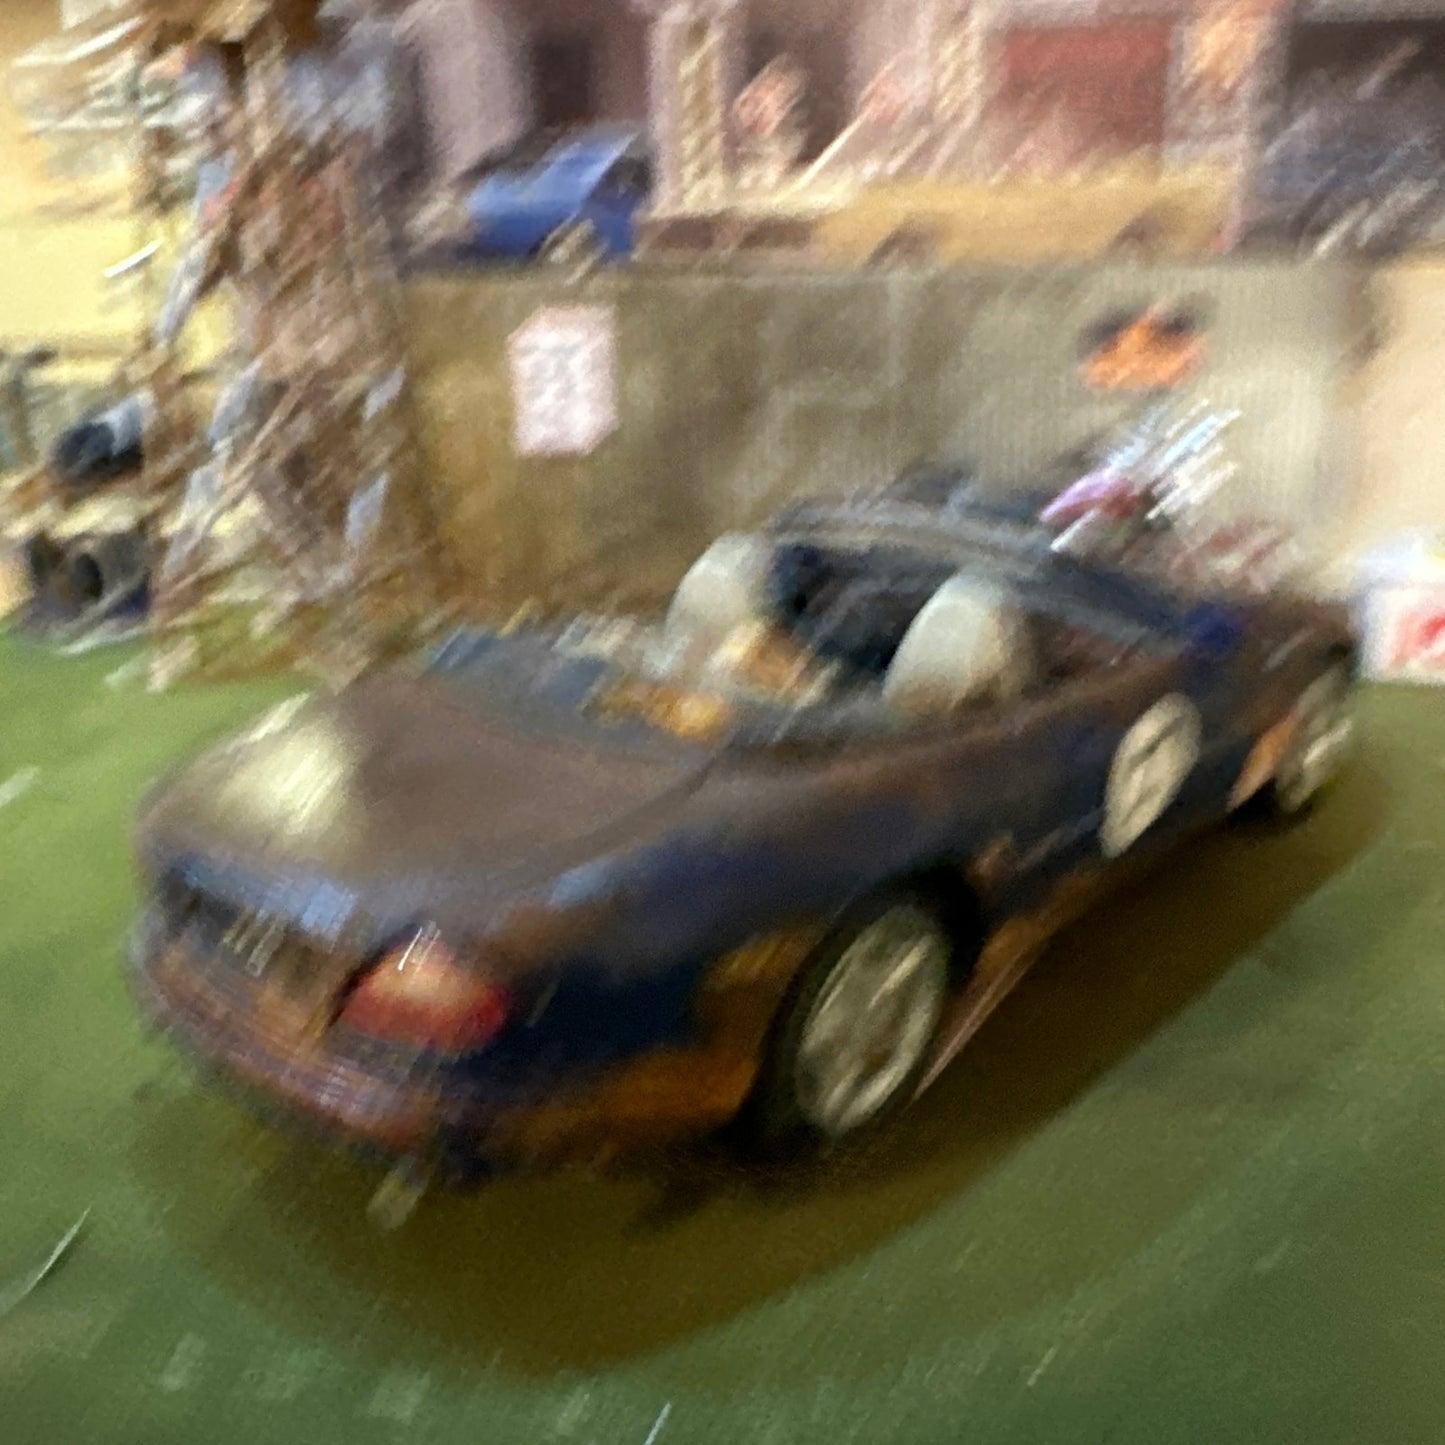 1996 Jaguar XK8 - Barn Find Cars - 1:18 DIECAST - Abused Race Car